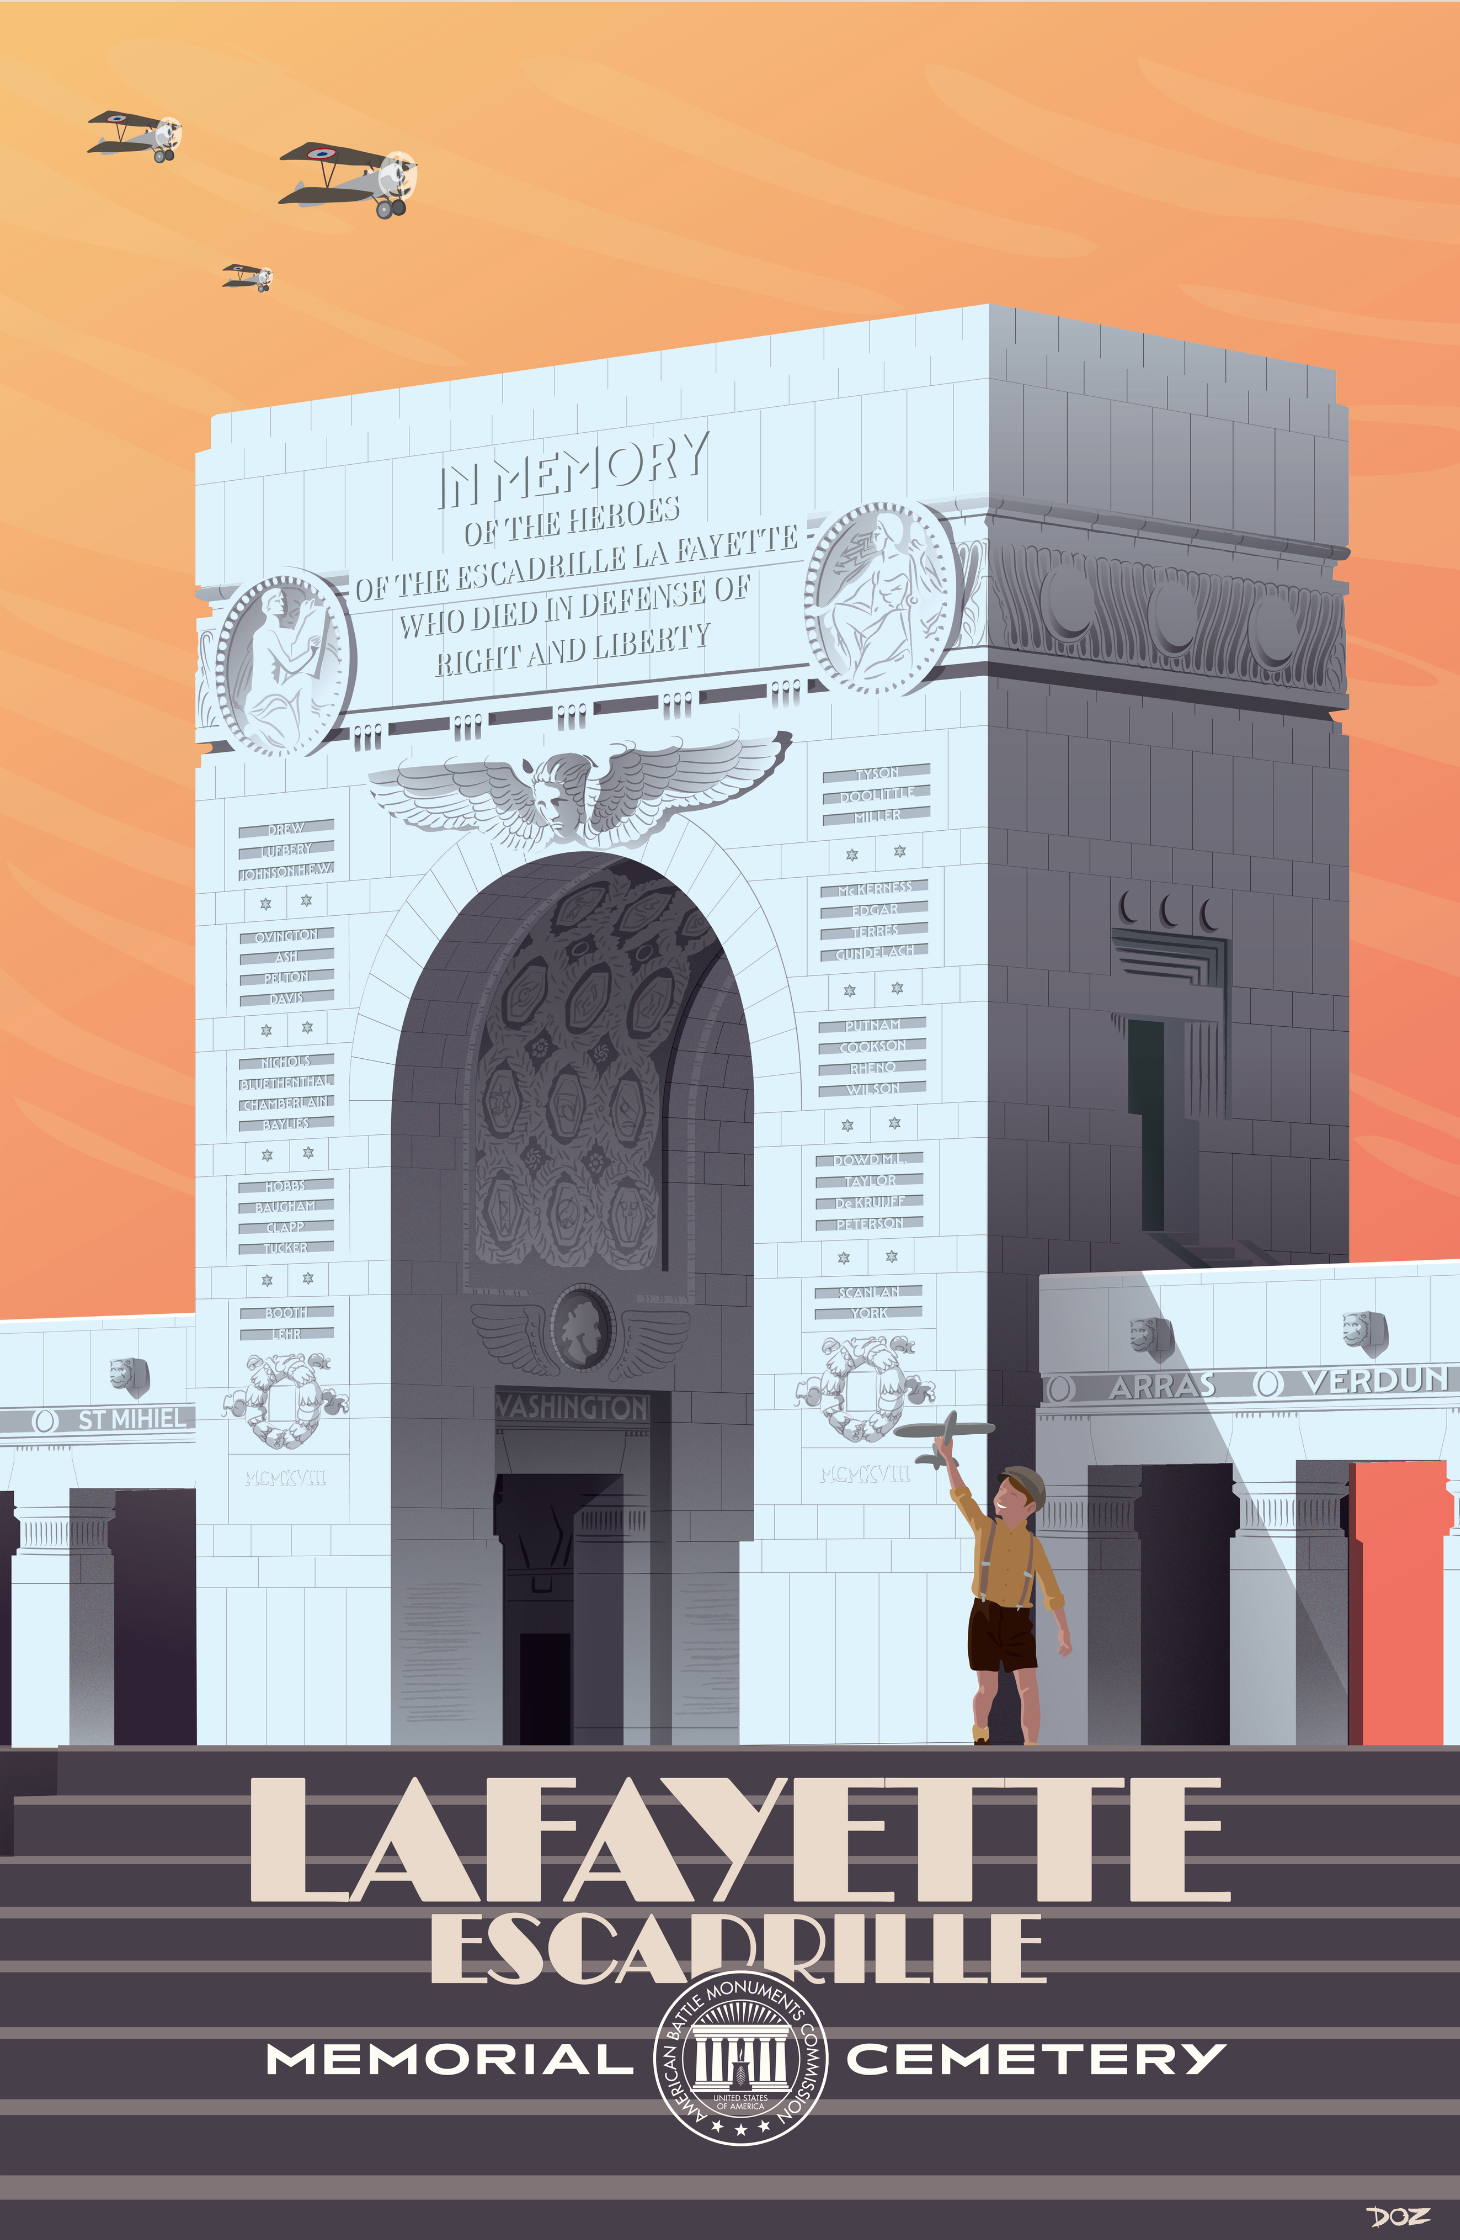 Vintage poster of Lafayette Escadrille Memorial Cemetery